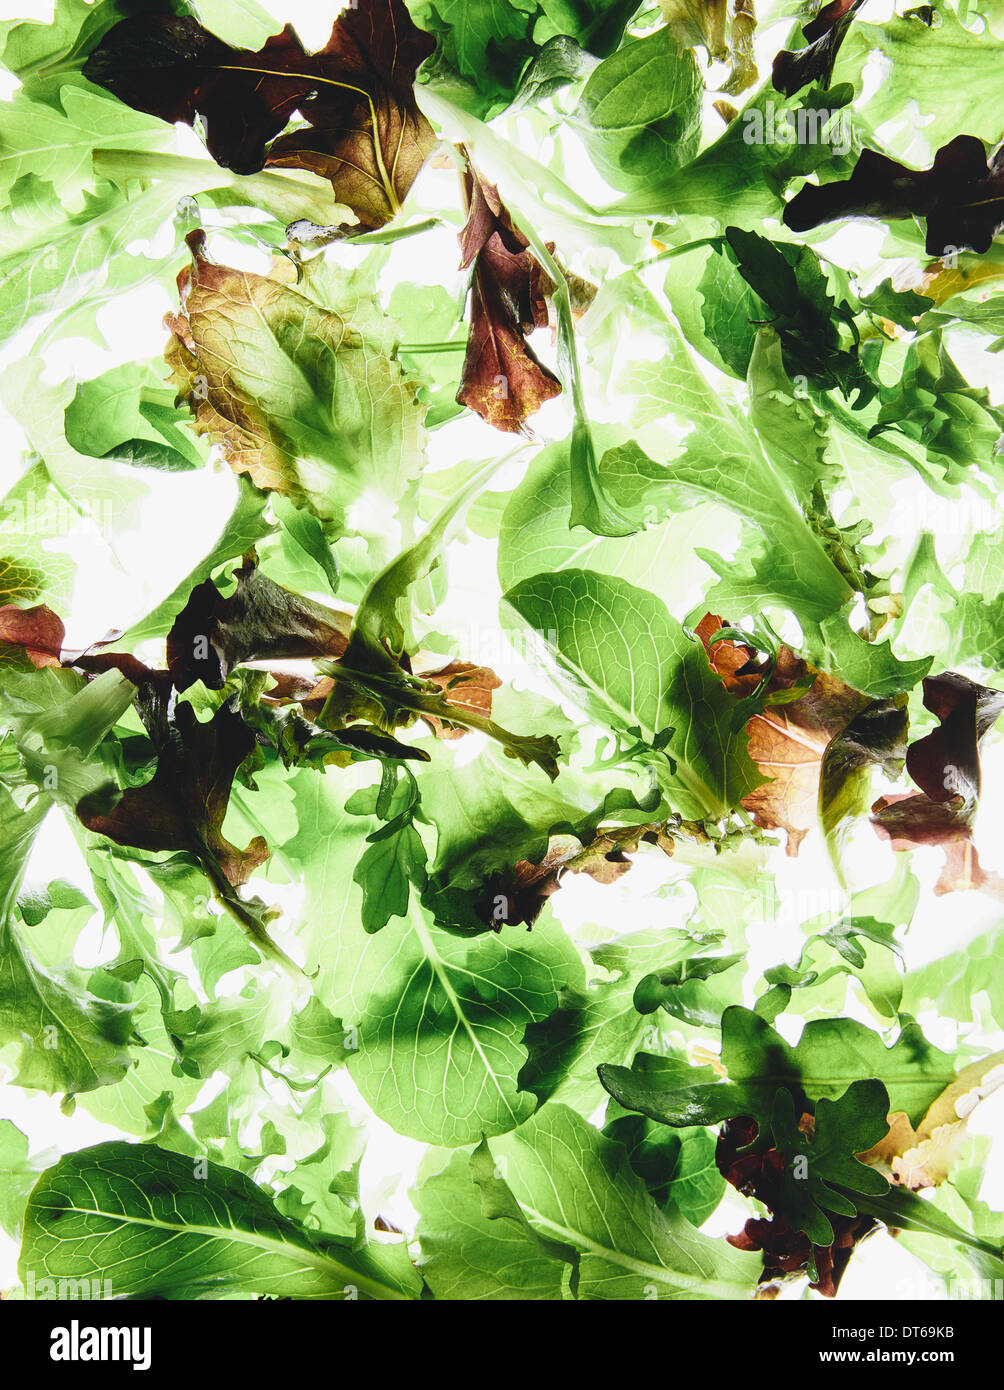 Organic mixed salad greens on white background Stock Photo